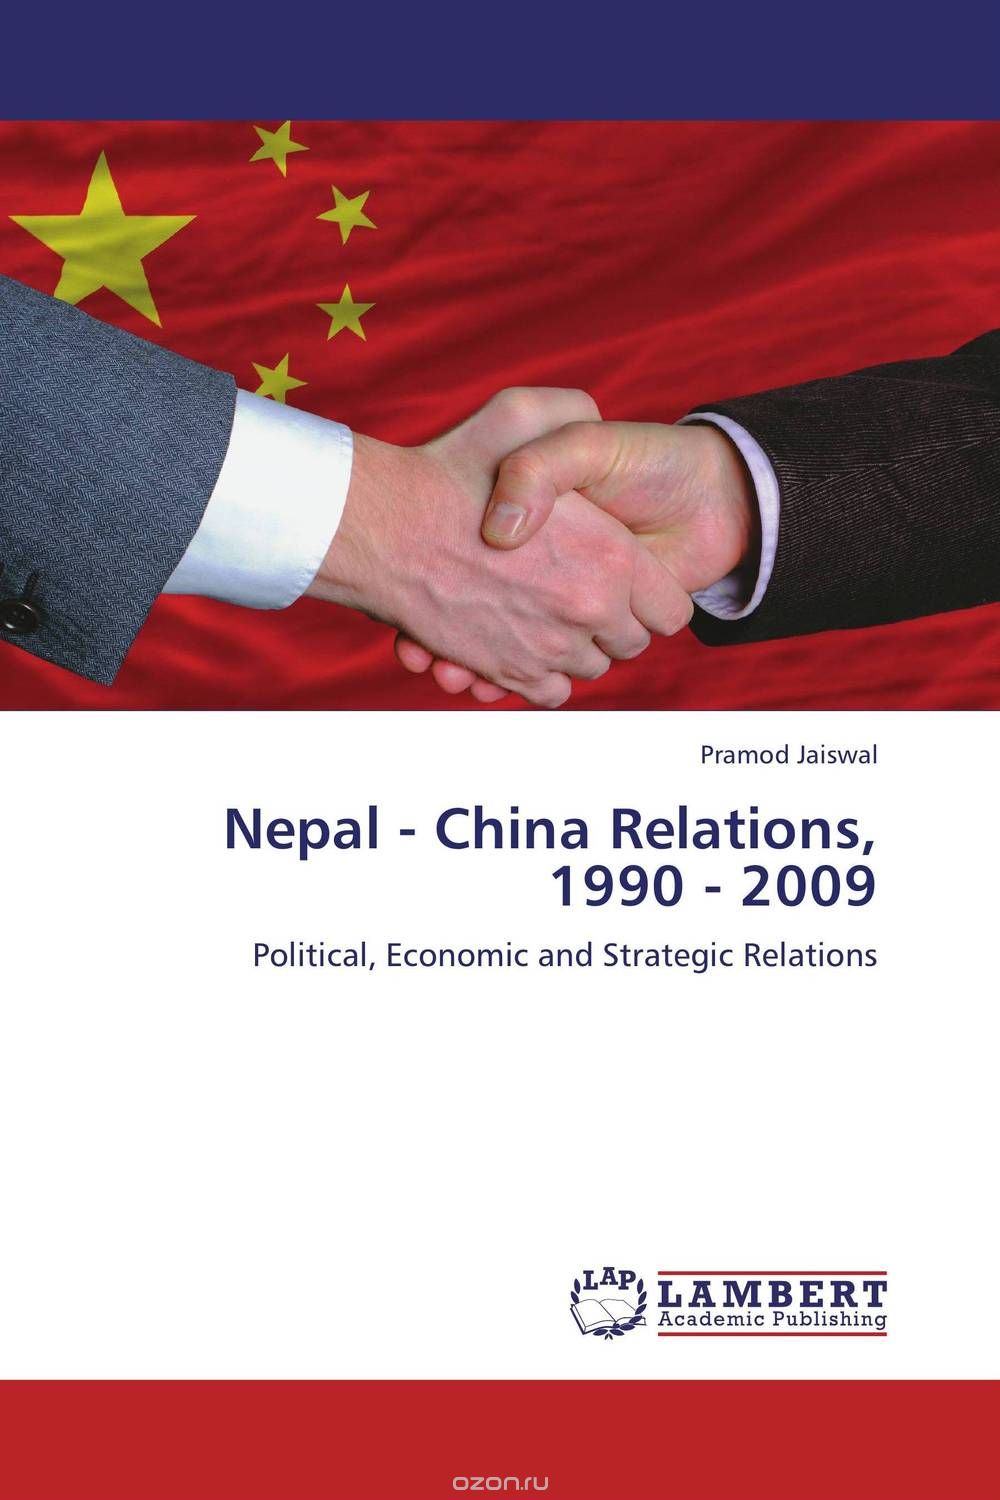 Скачать книгу "Nepal - China Relations, 1990 - 2009"